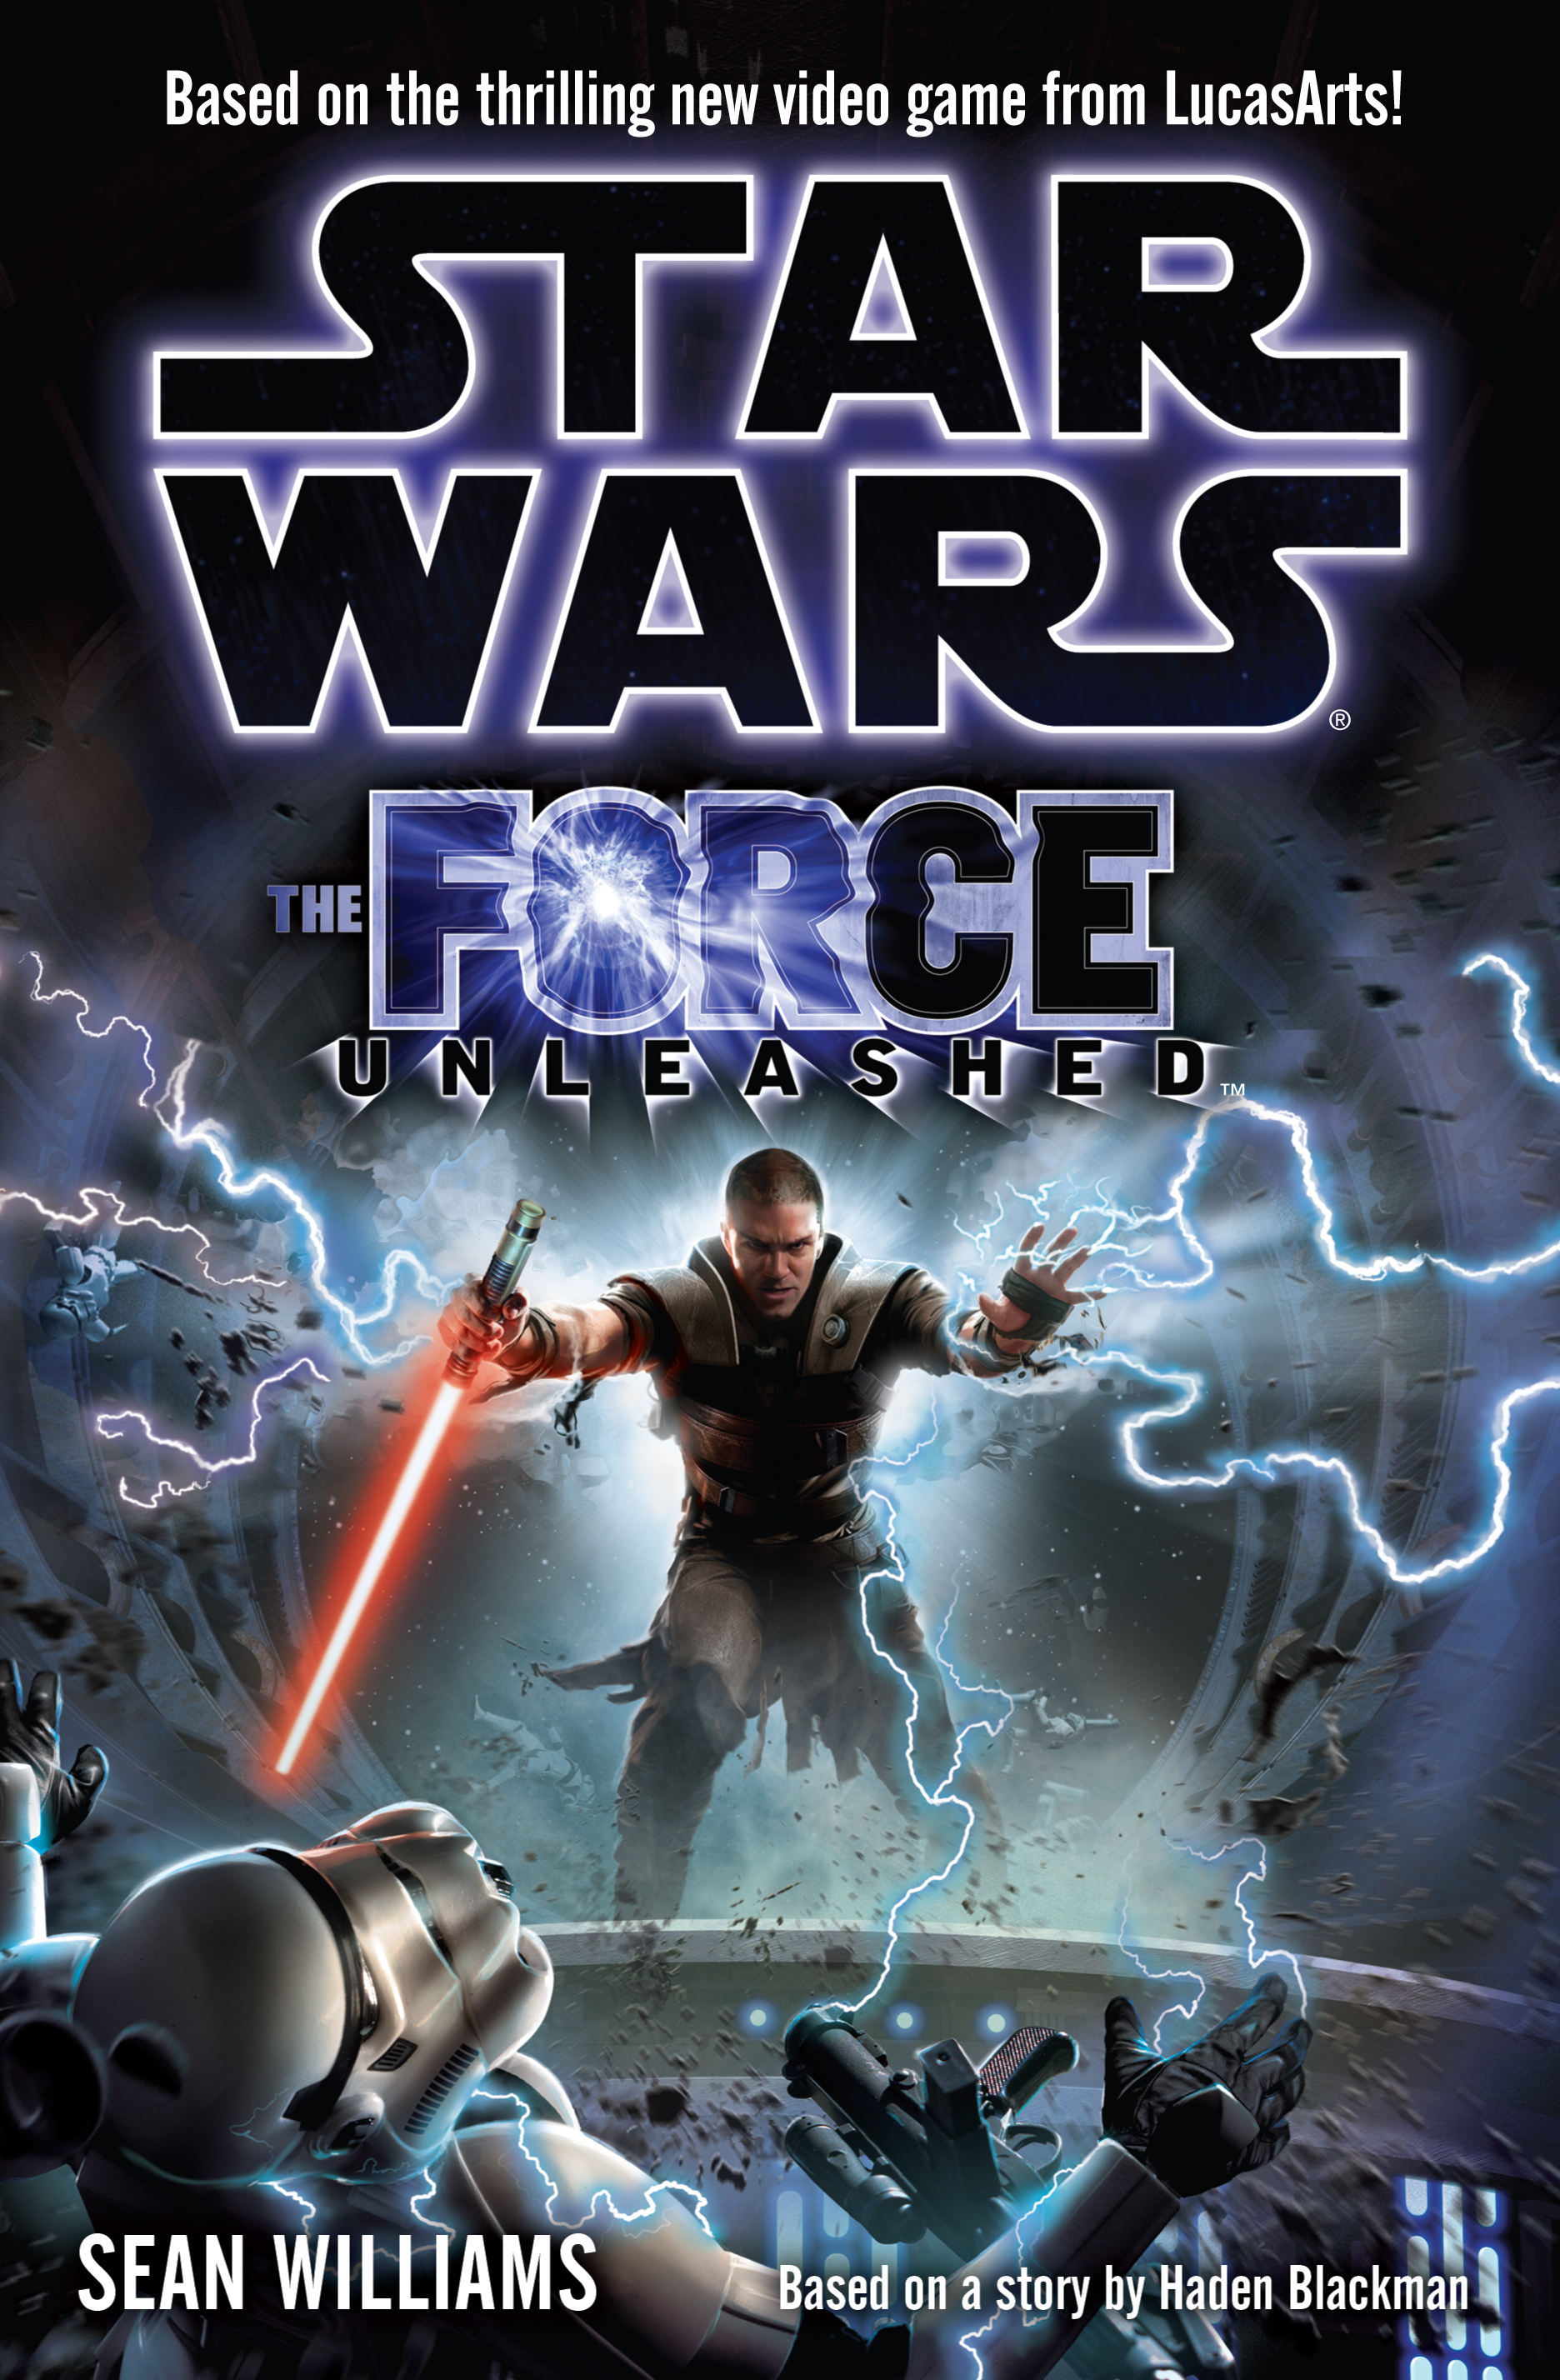 star wars the force awakens wiki movie